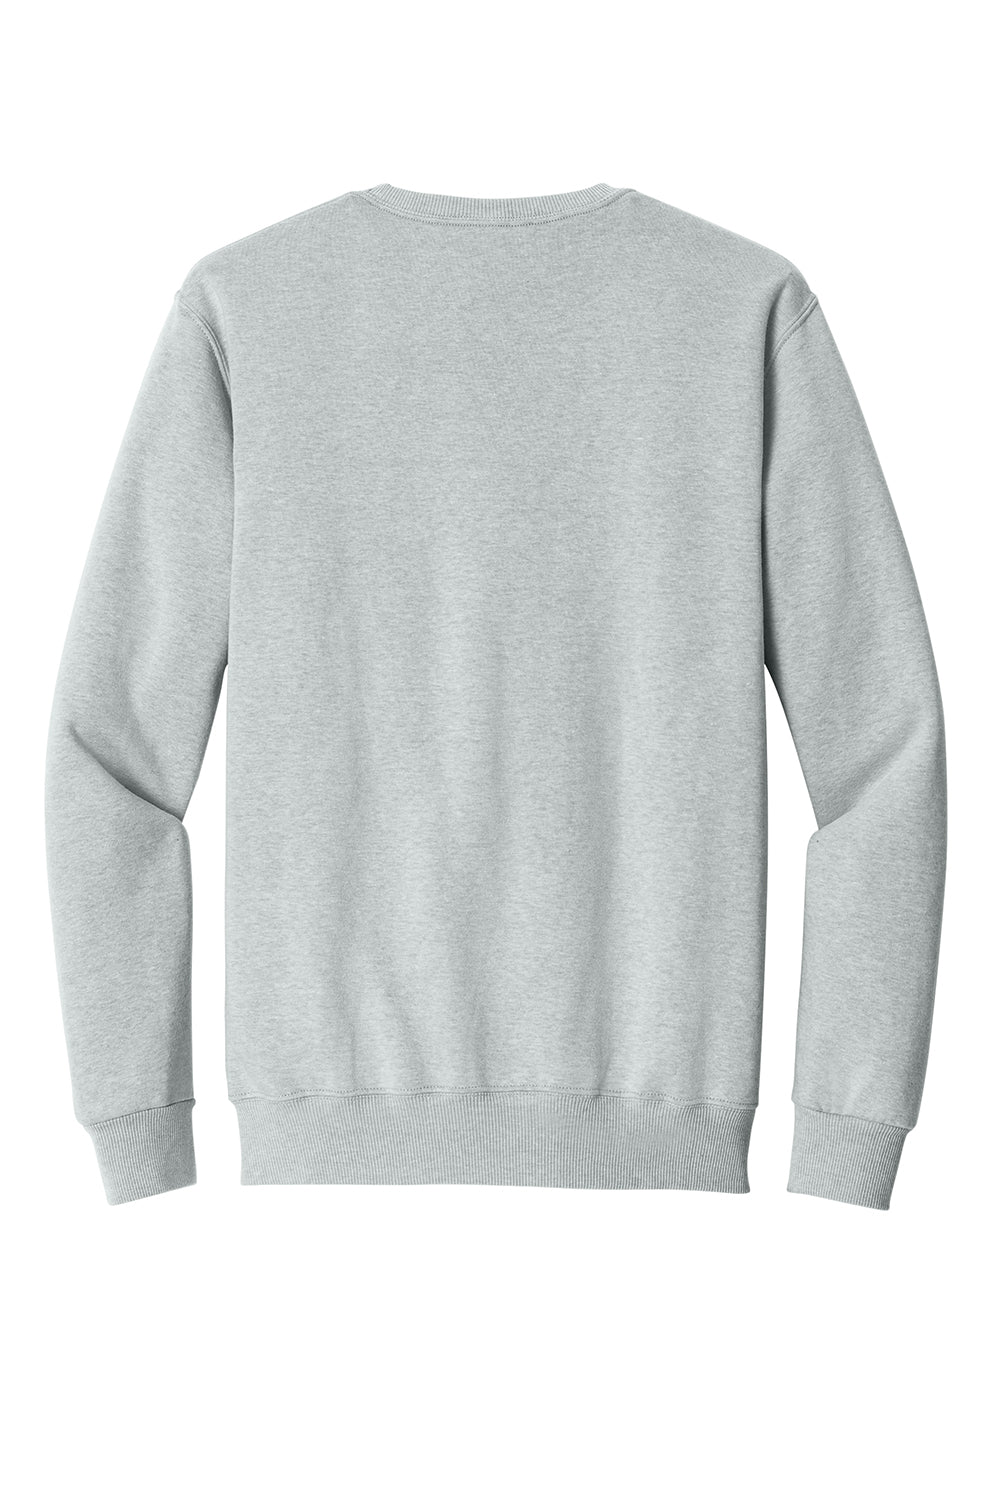 Jerzees 701M Mens Eco Premium Crewneck Sweatshirt Heather Frost Grey Flat Back